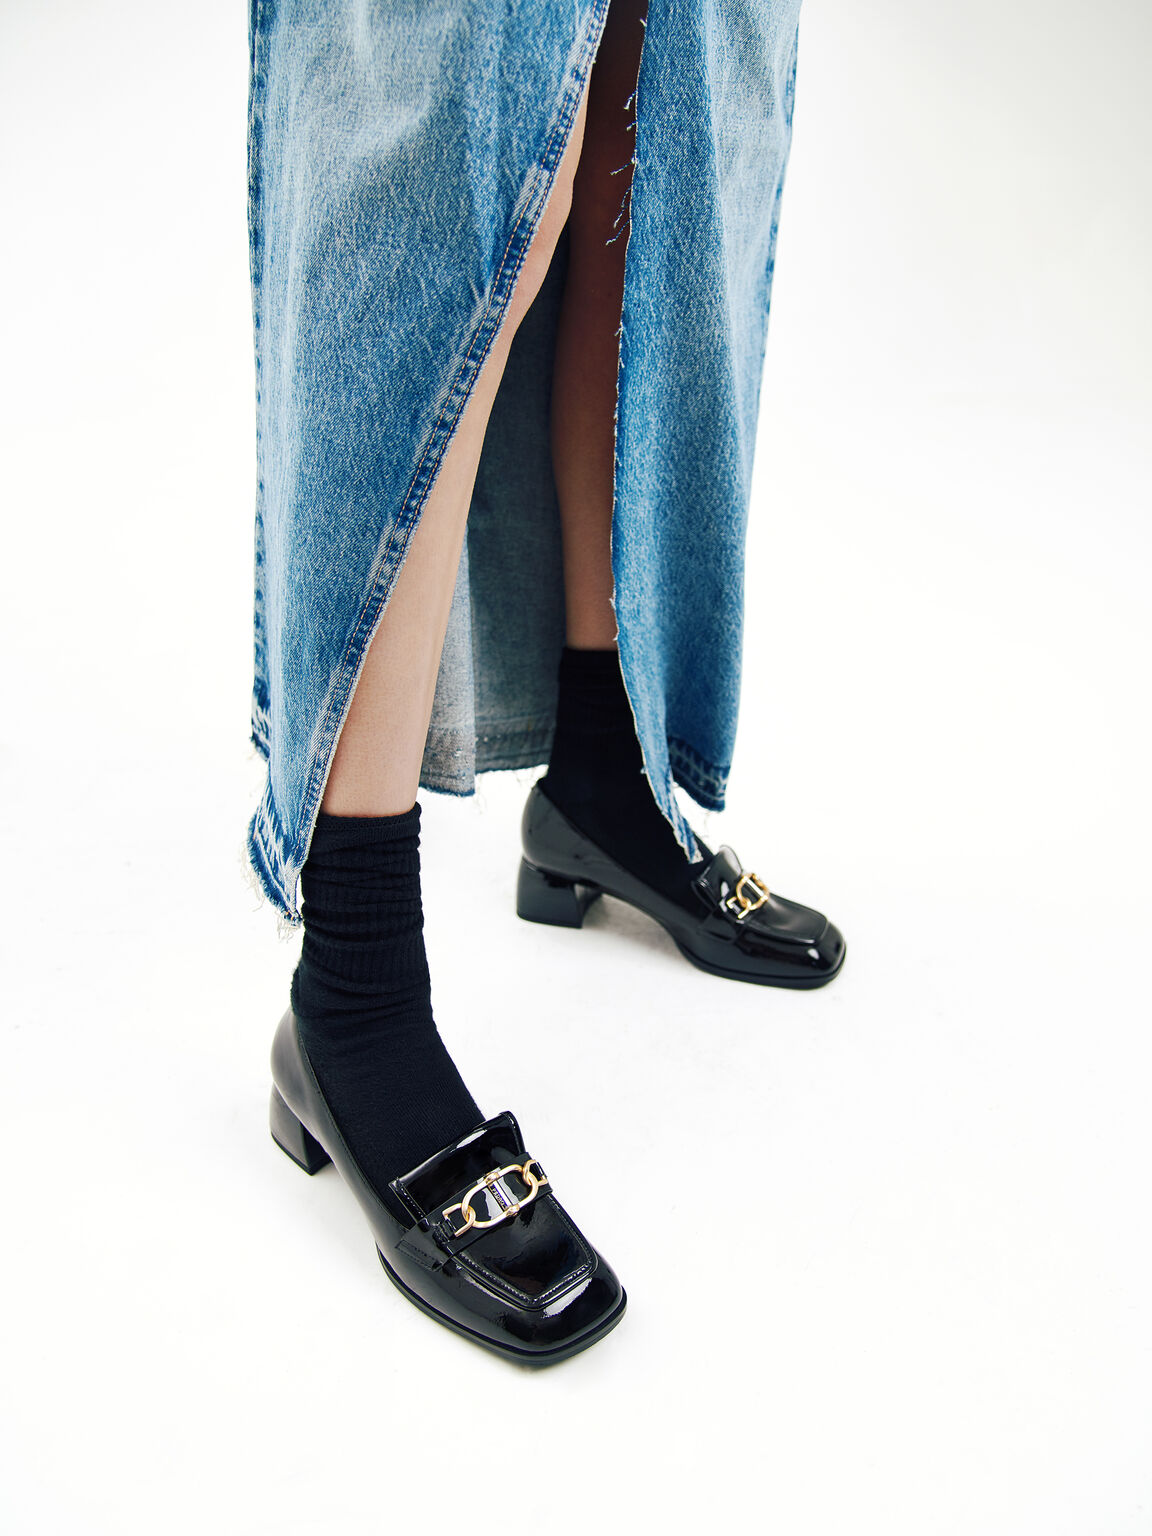 Jean Leather Heels, Black, hi-res